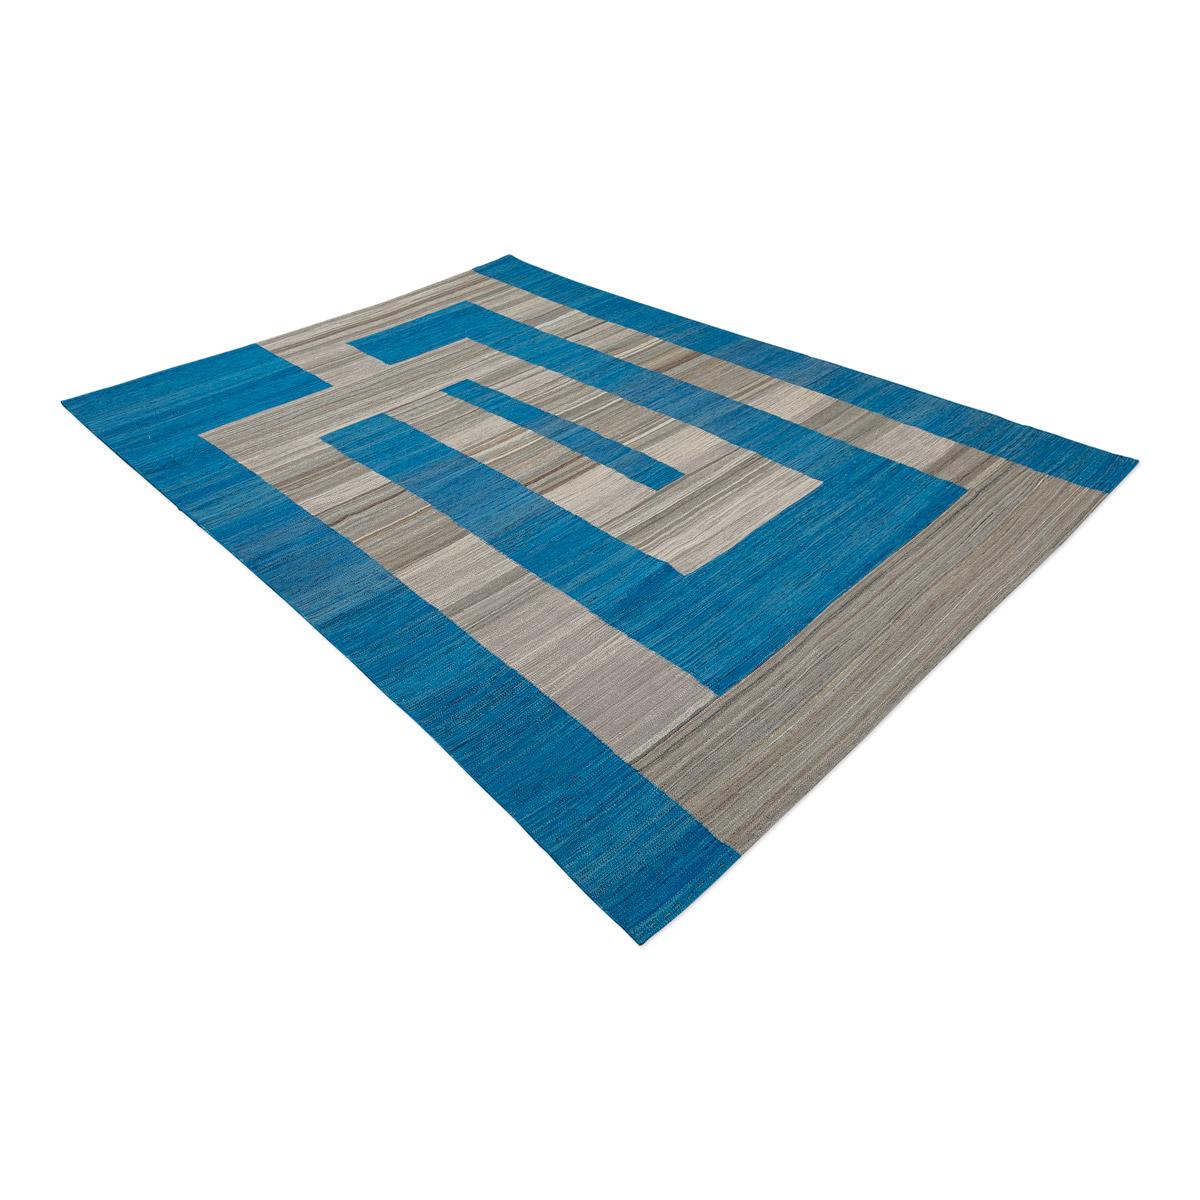 Pakistani Handmade Flat-Weave Kilim Blue and Gray Wool Geometrical Design. 2.90 x 2.05 m. For Sale